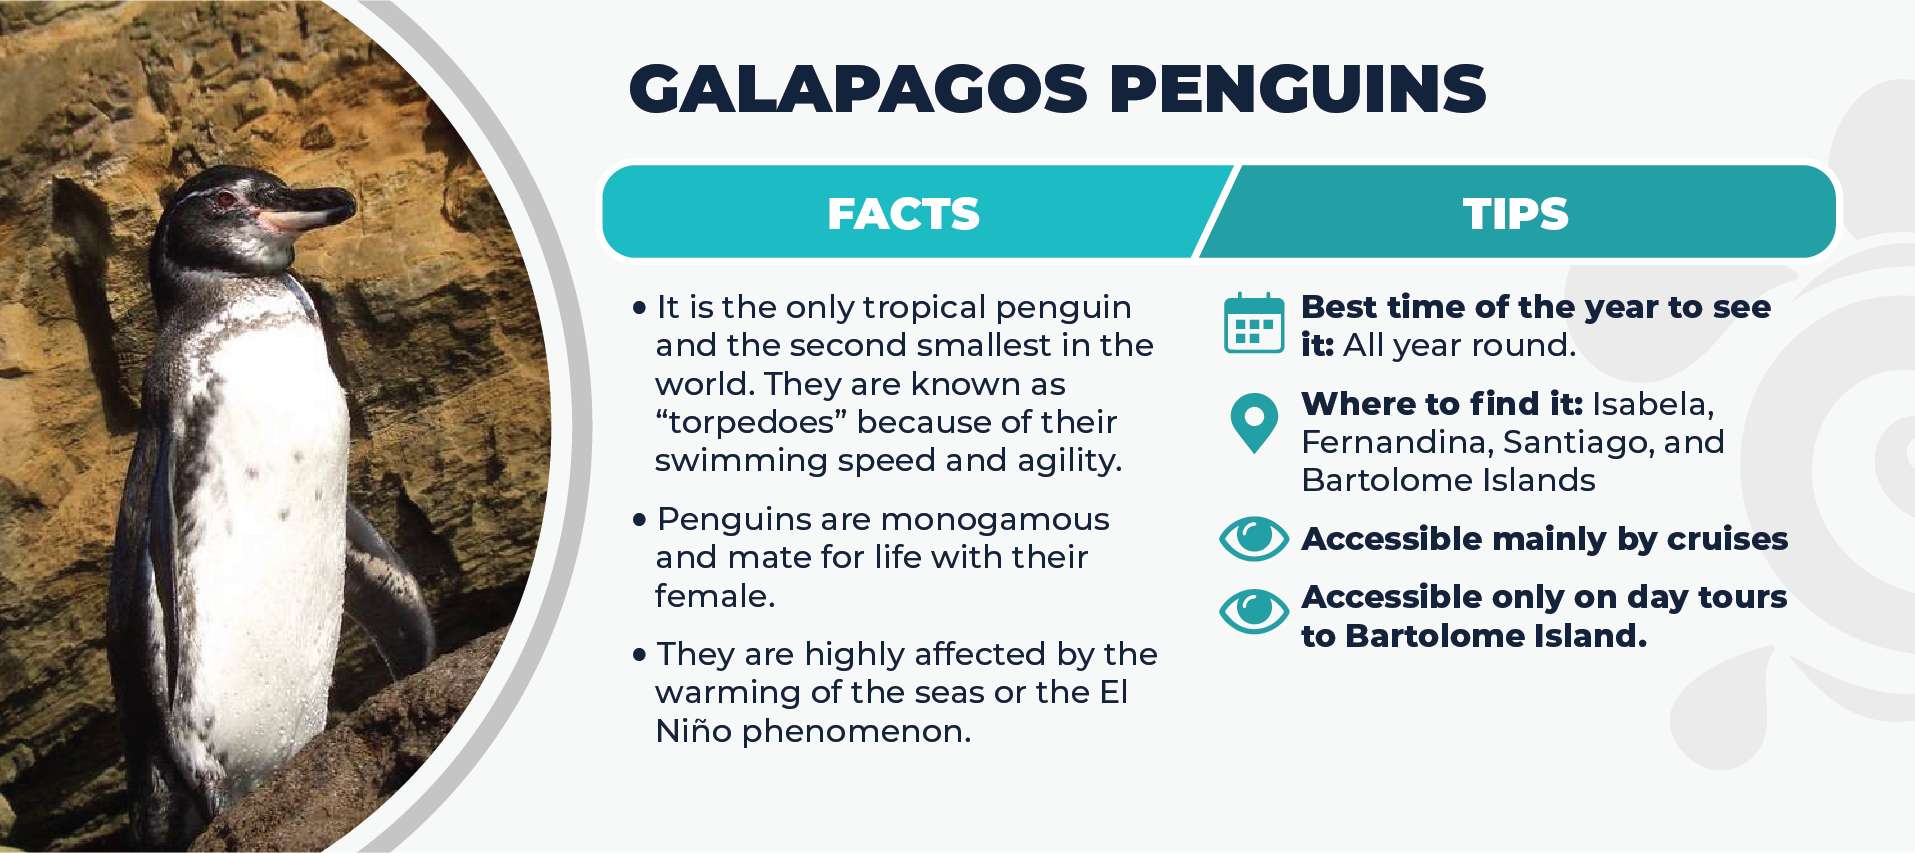 Galapagos Penguins facts